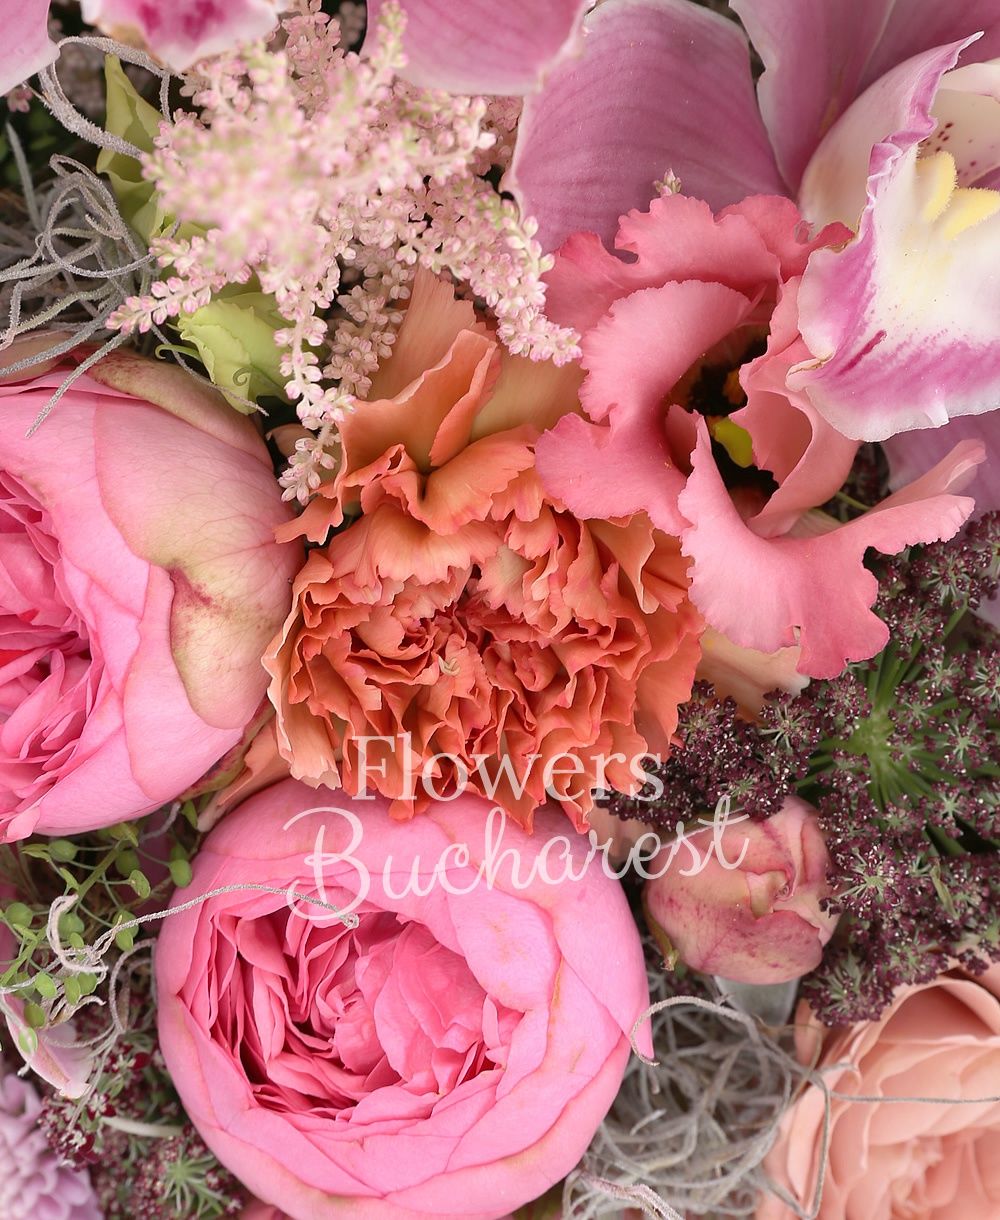 7 piano roses, 5 carnations, 5 cappuccino roses, 3 lisianthus, 3 astilbe, 2 pink santini, pink cymbidium, greenery